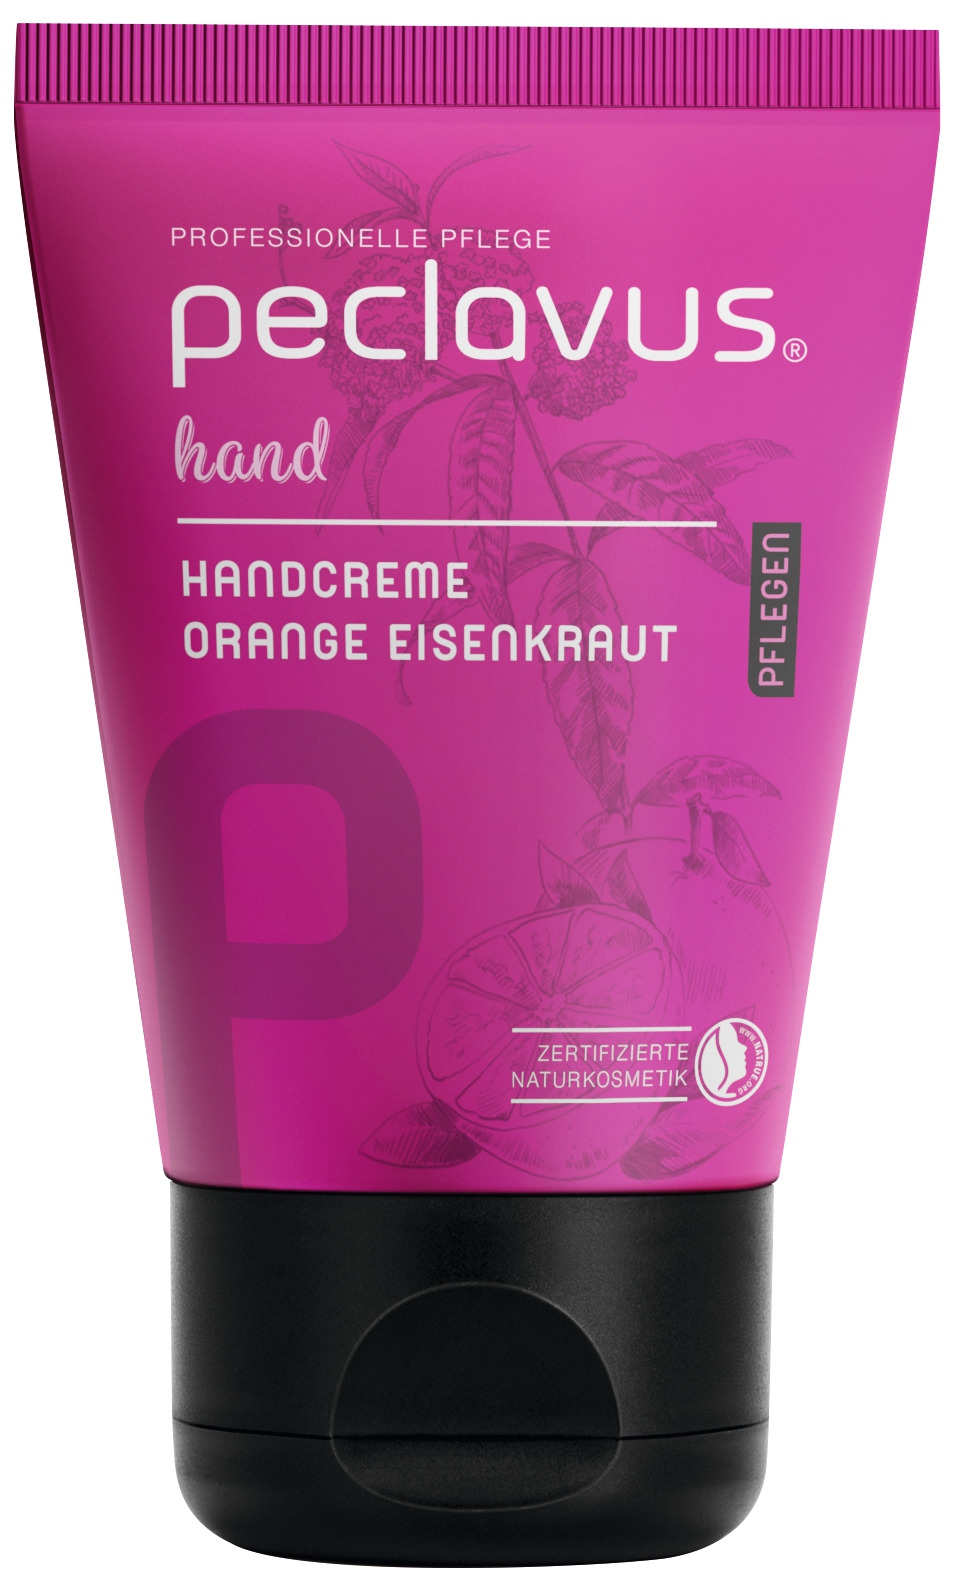 PECLAVUS Handcreme Orange Eisenkraut 30 ml | Pflegen